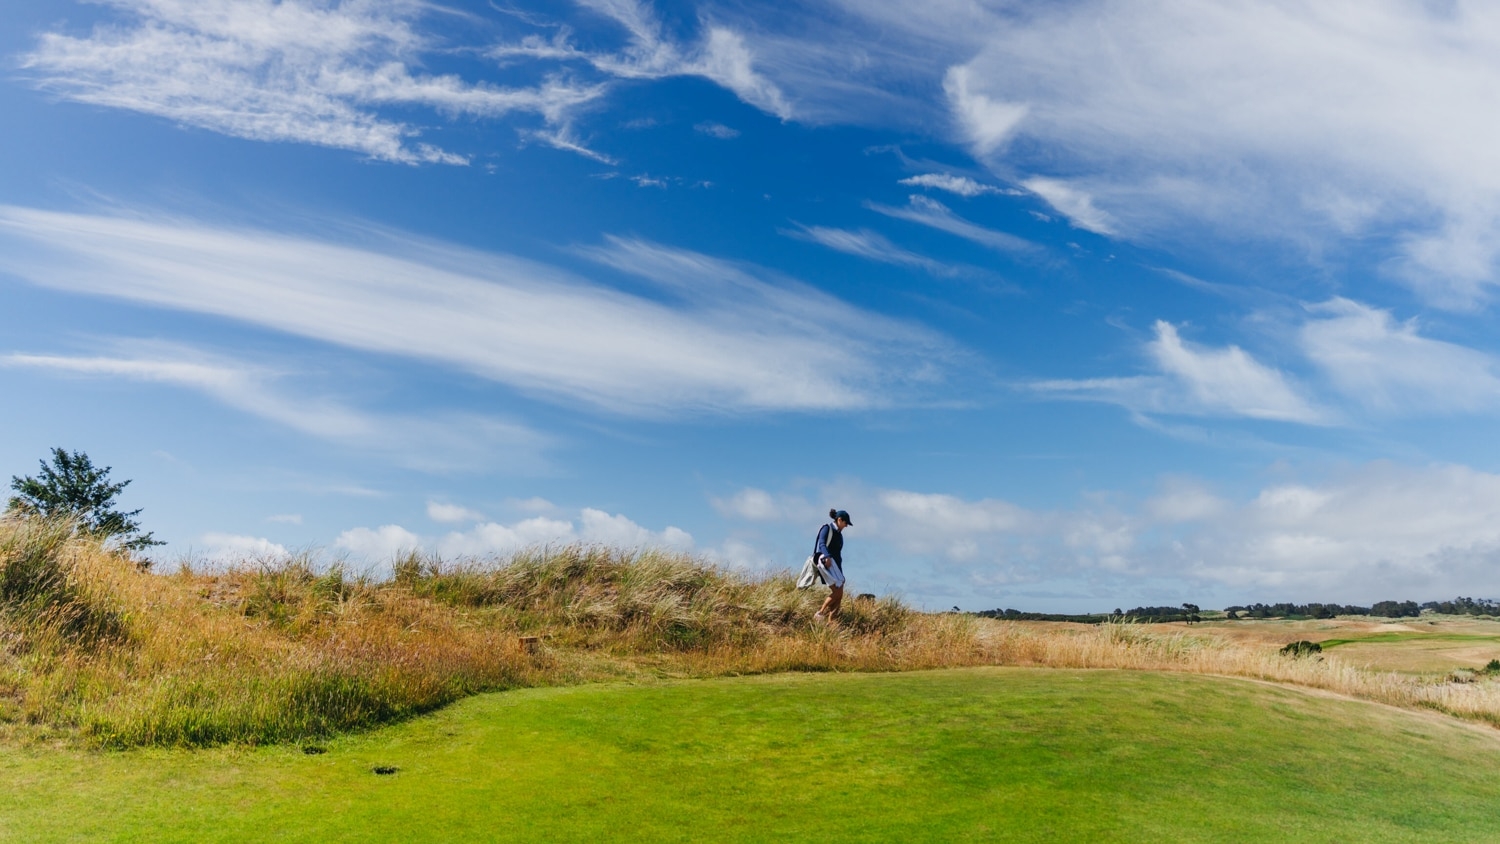 A wide shot shows Caroline Ellington far away walking on some grasslands next to a golf course.